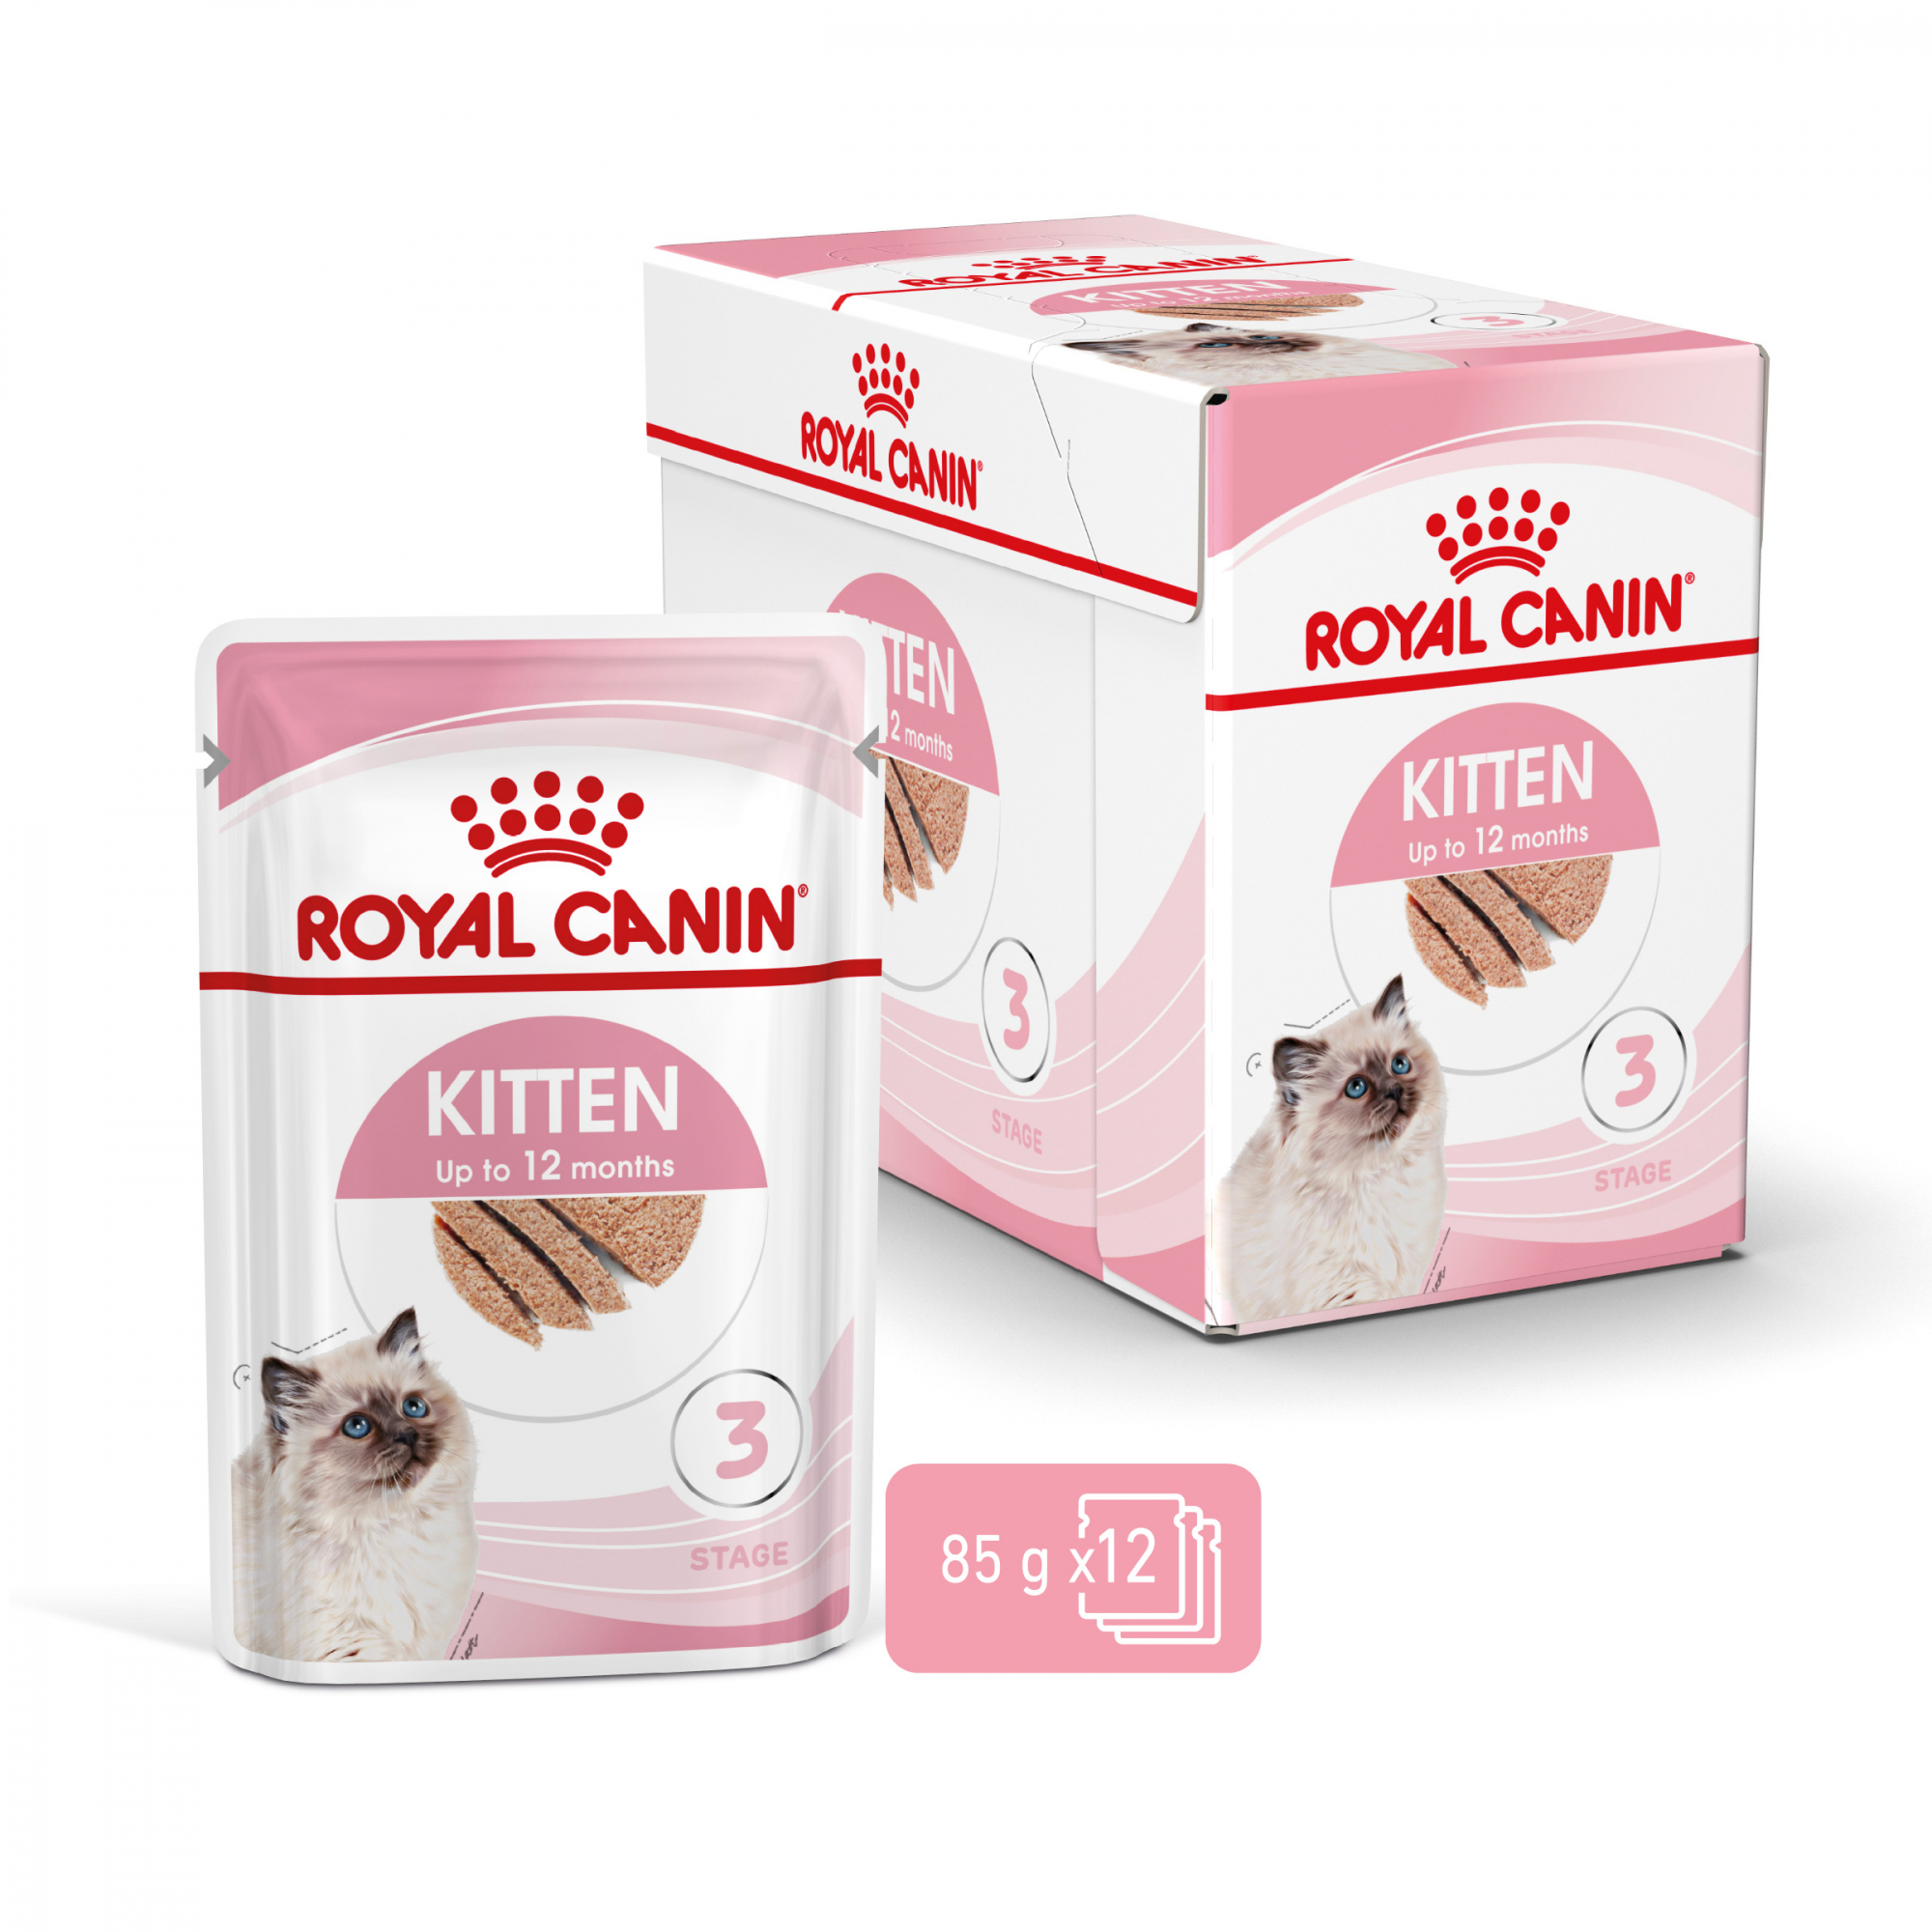 Royal Canin Instinctive Kitten Patè in mousse per gattini